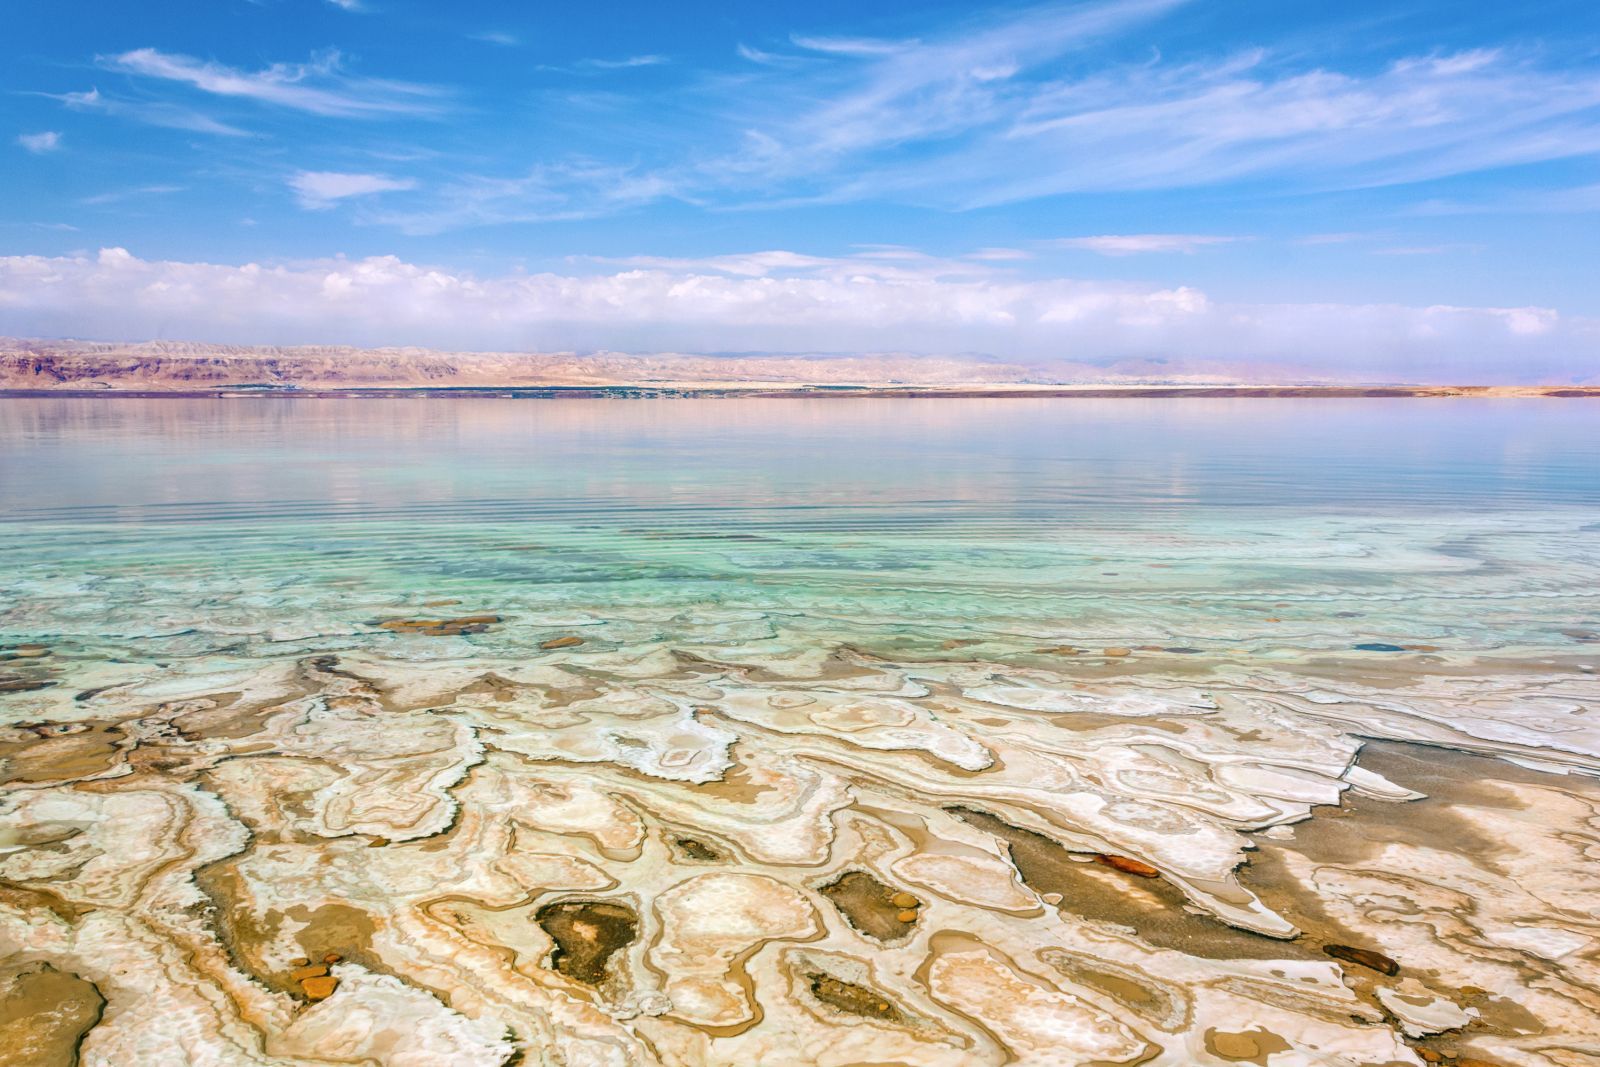 The Dead Sea, Jordan